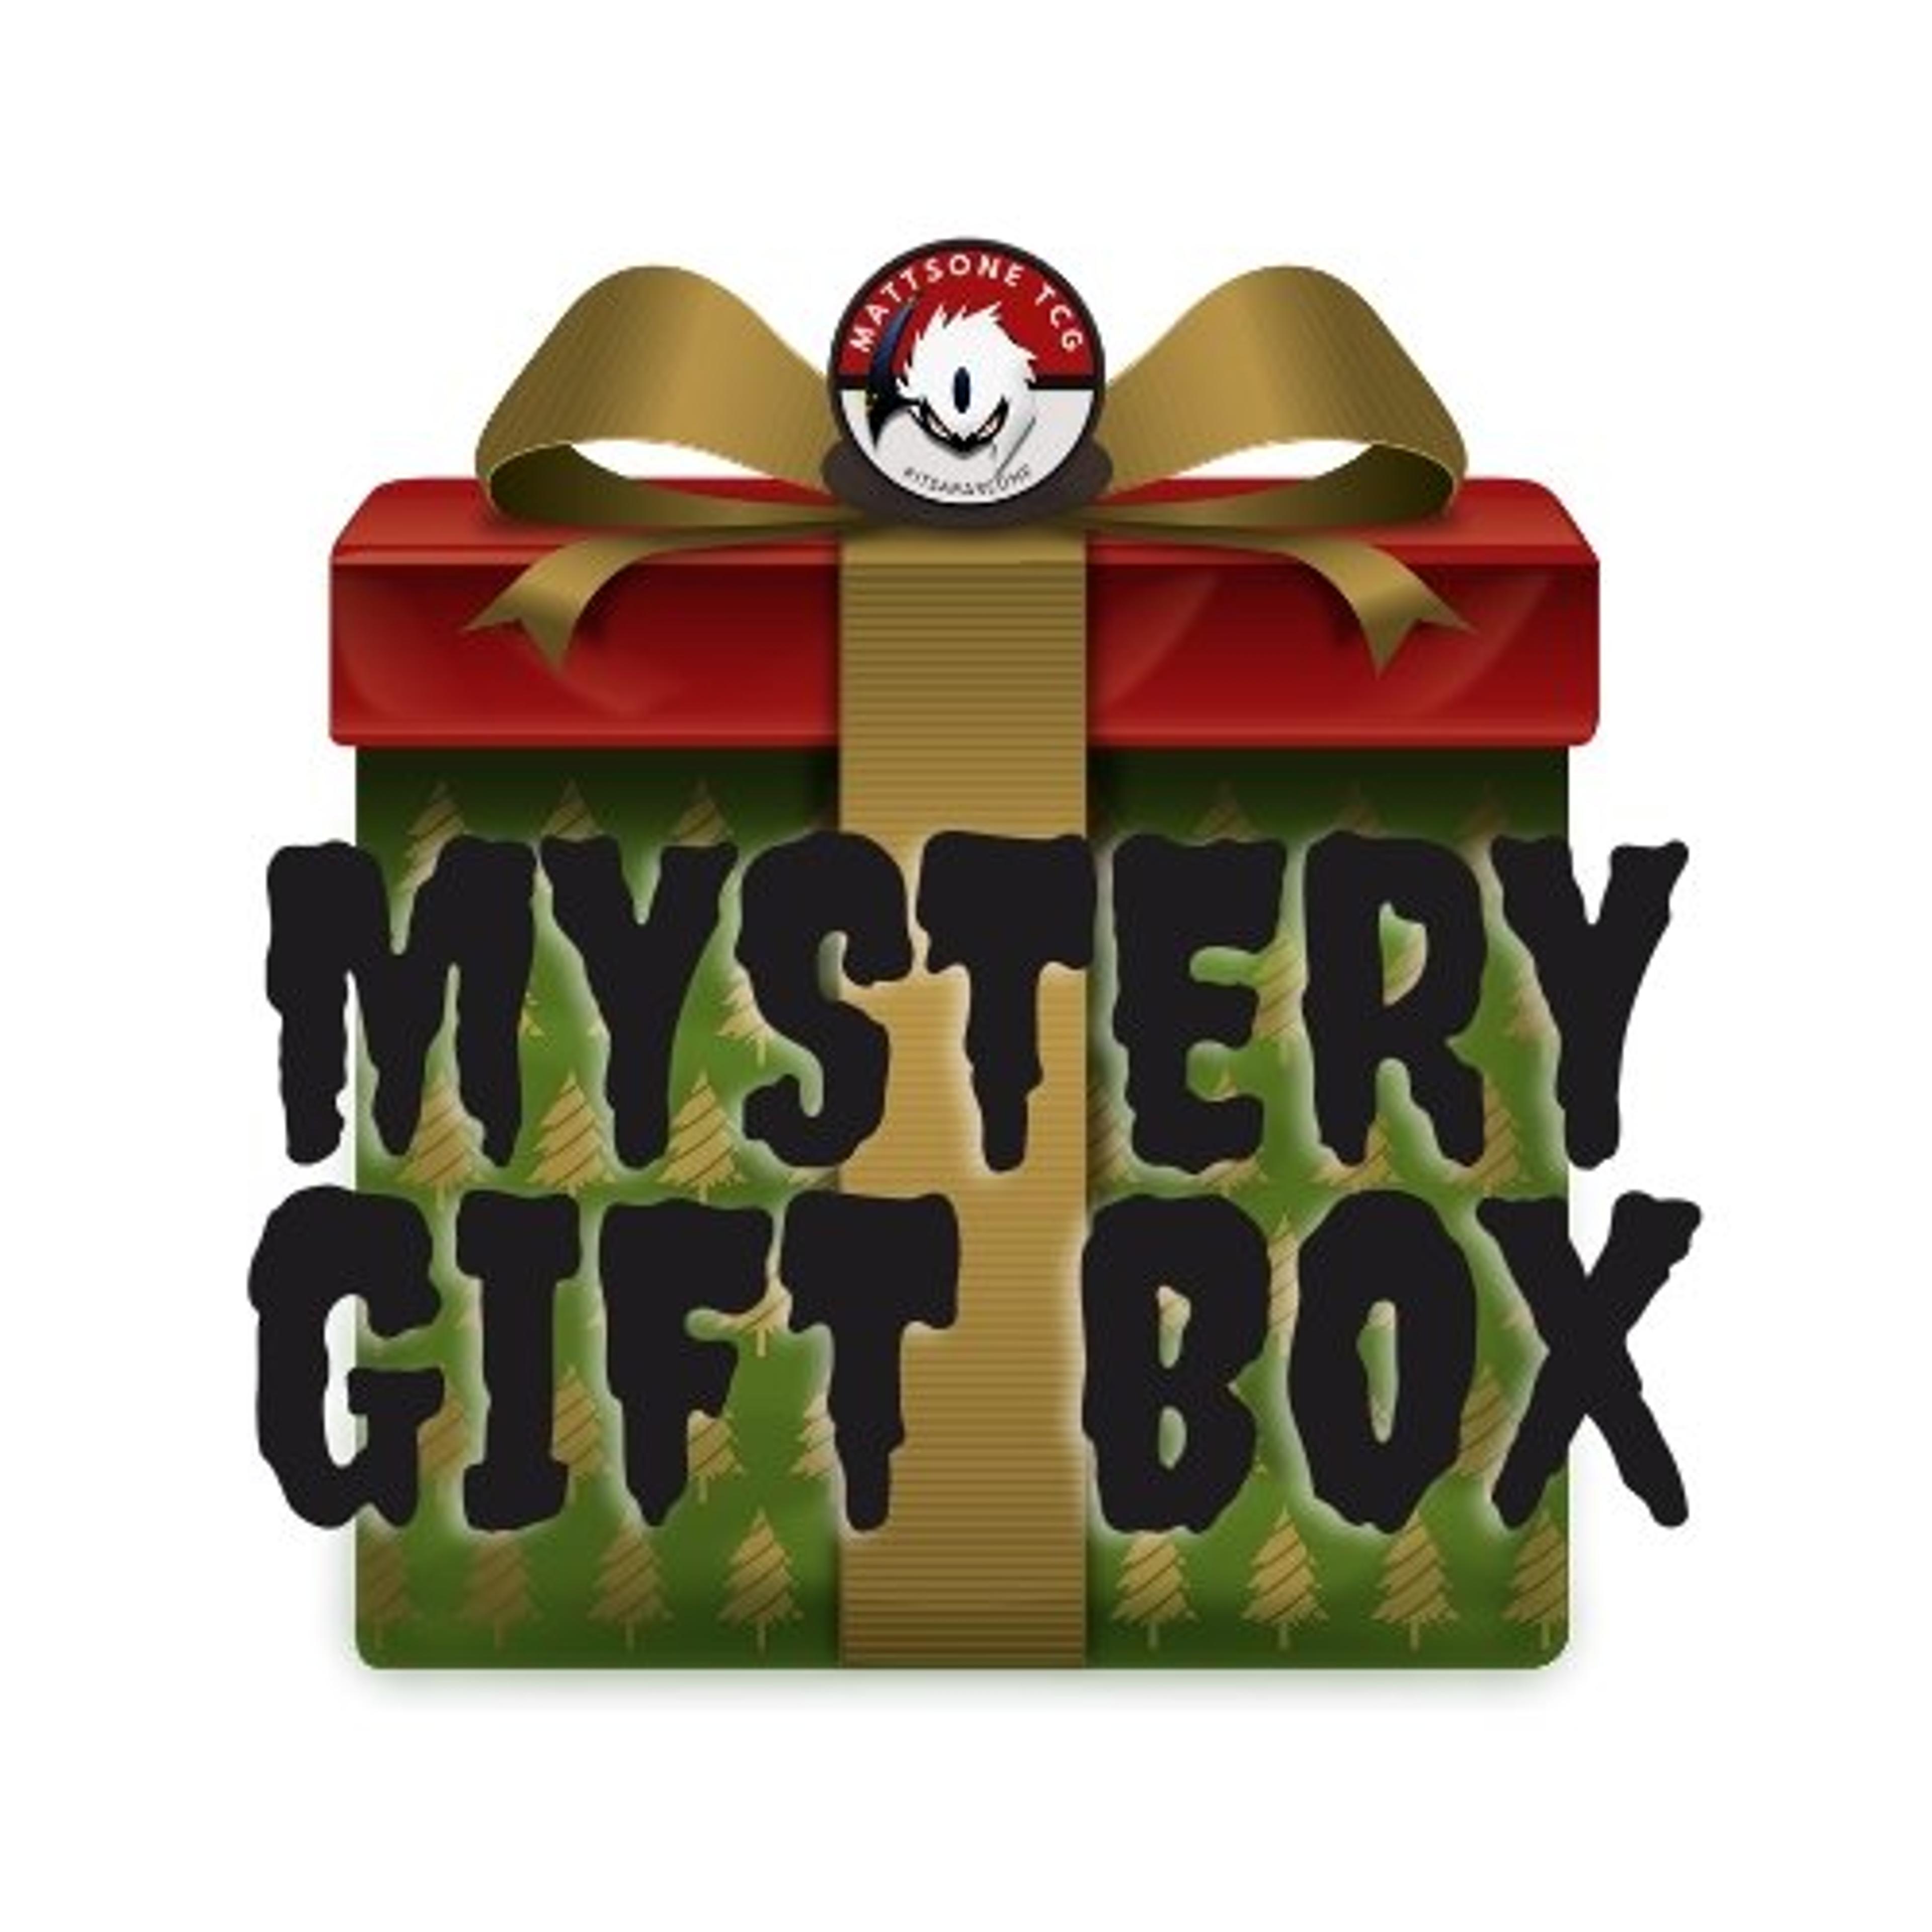 Shipped Mystery Gift Box ($100)